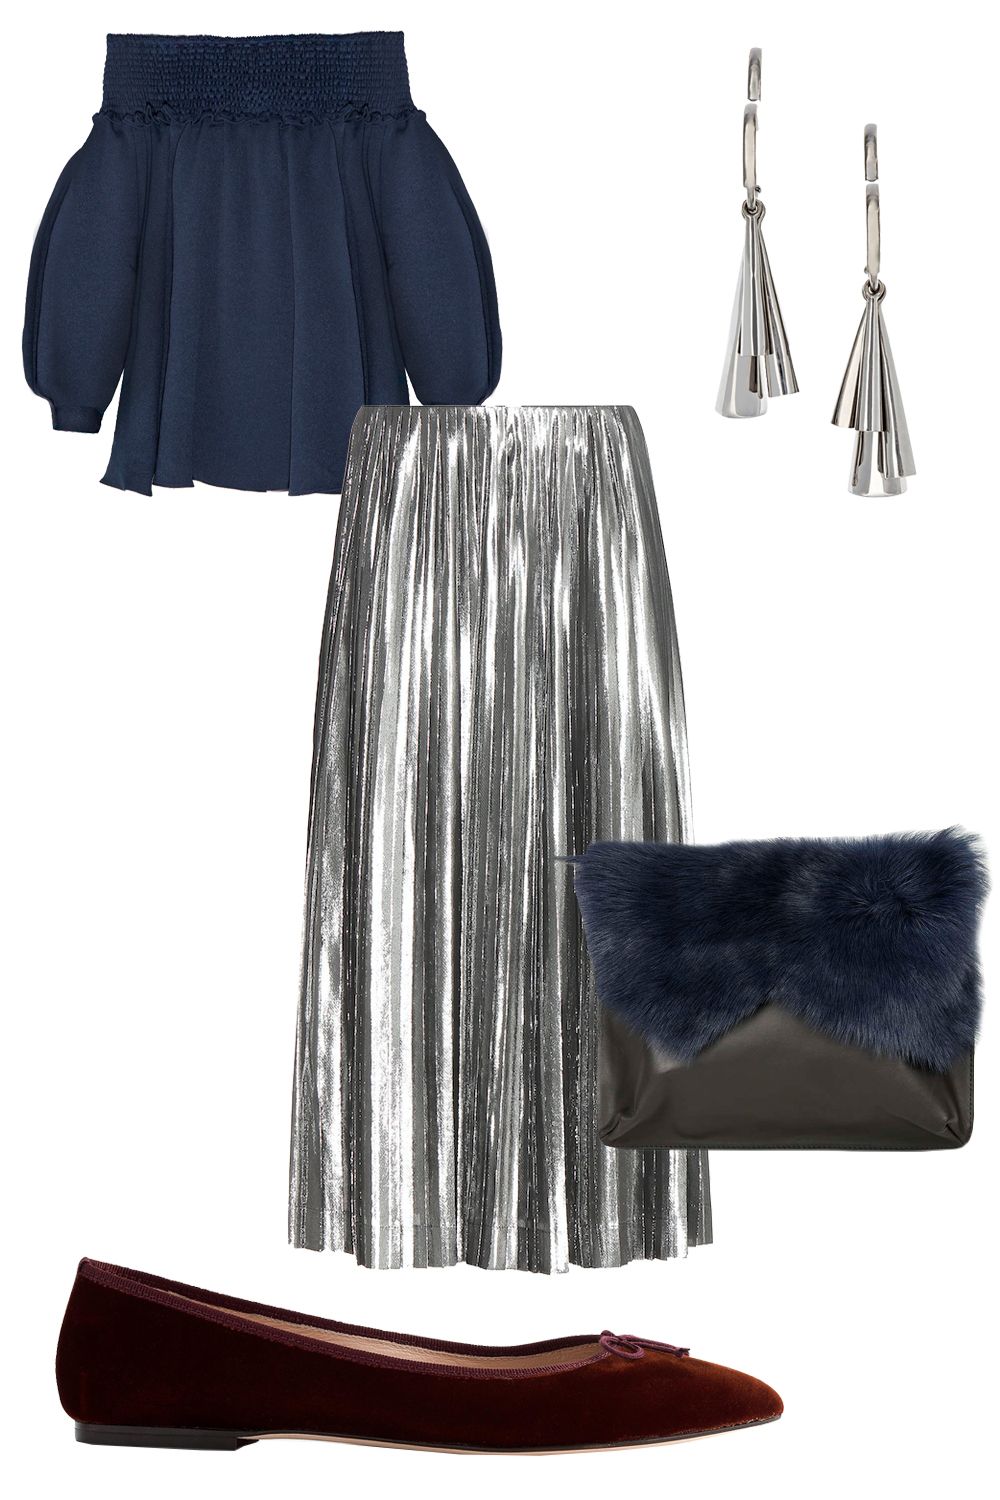 metallic skirt outfit ideas